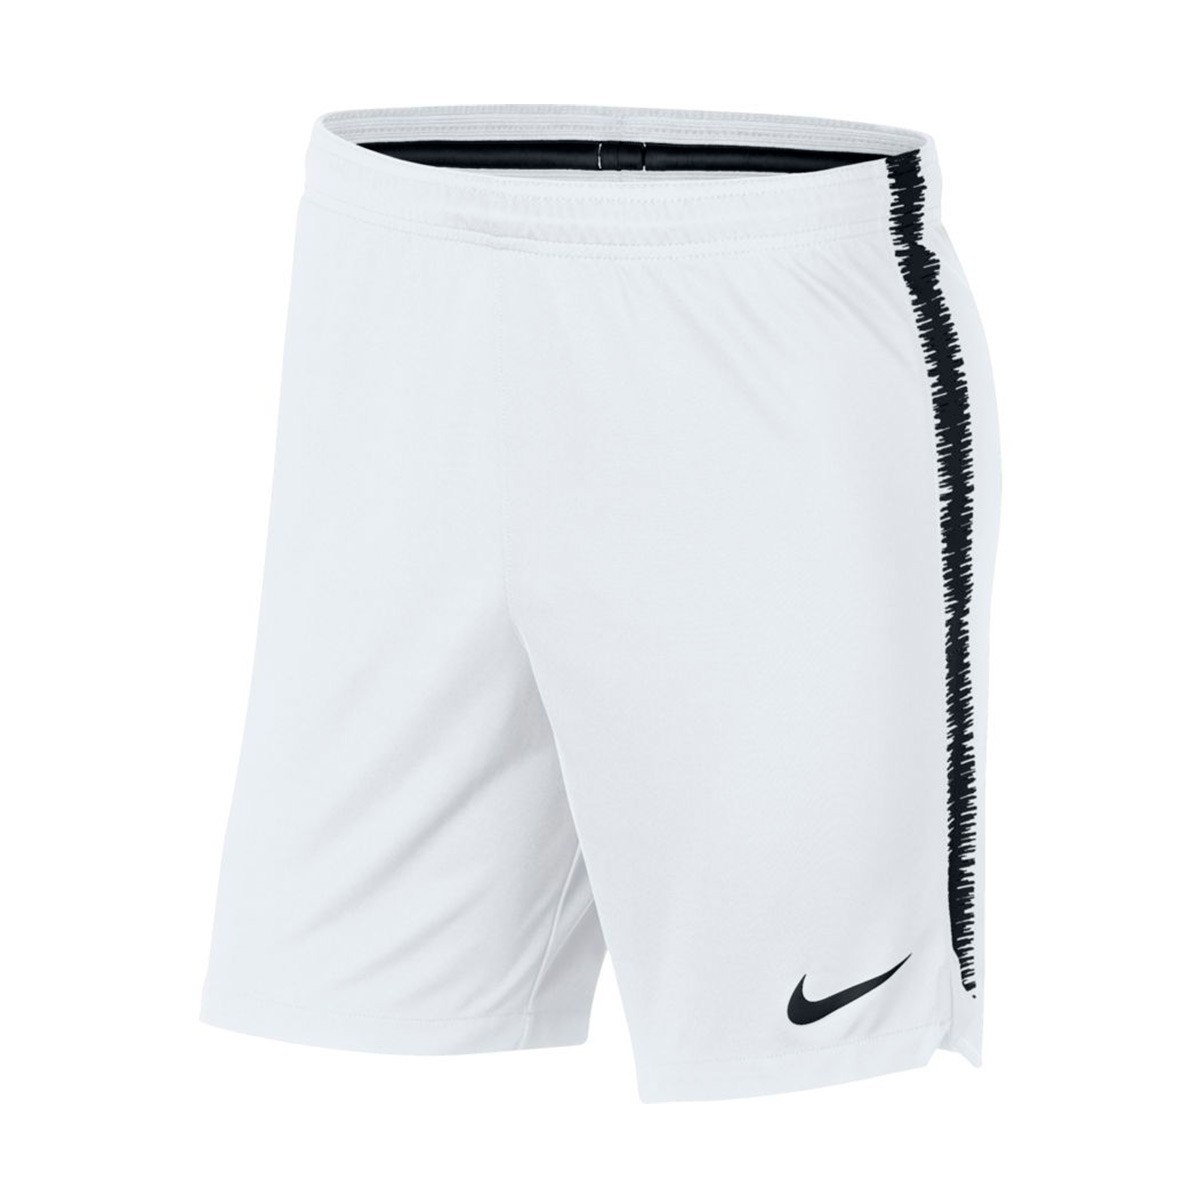 Shorts Nike Dry Squad White-Black - Football store Fútbol Emotion